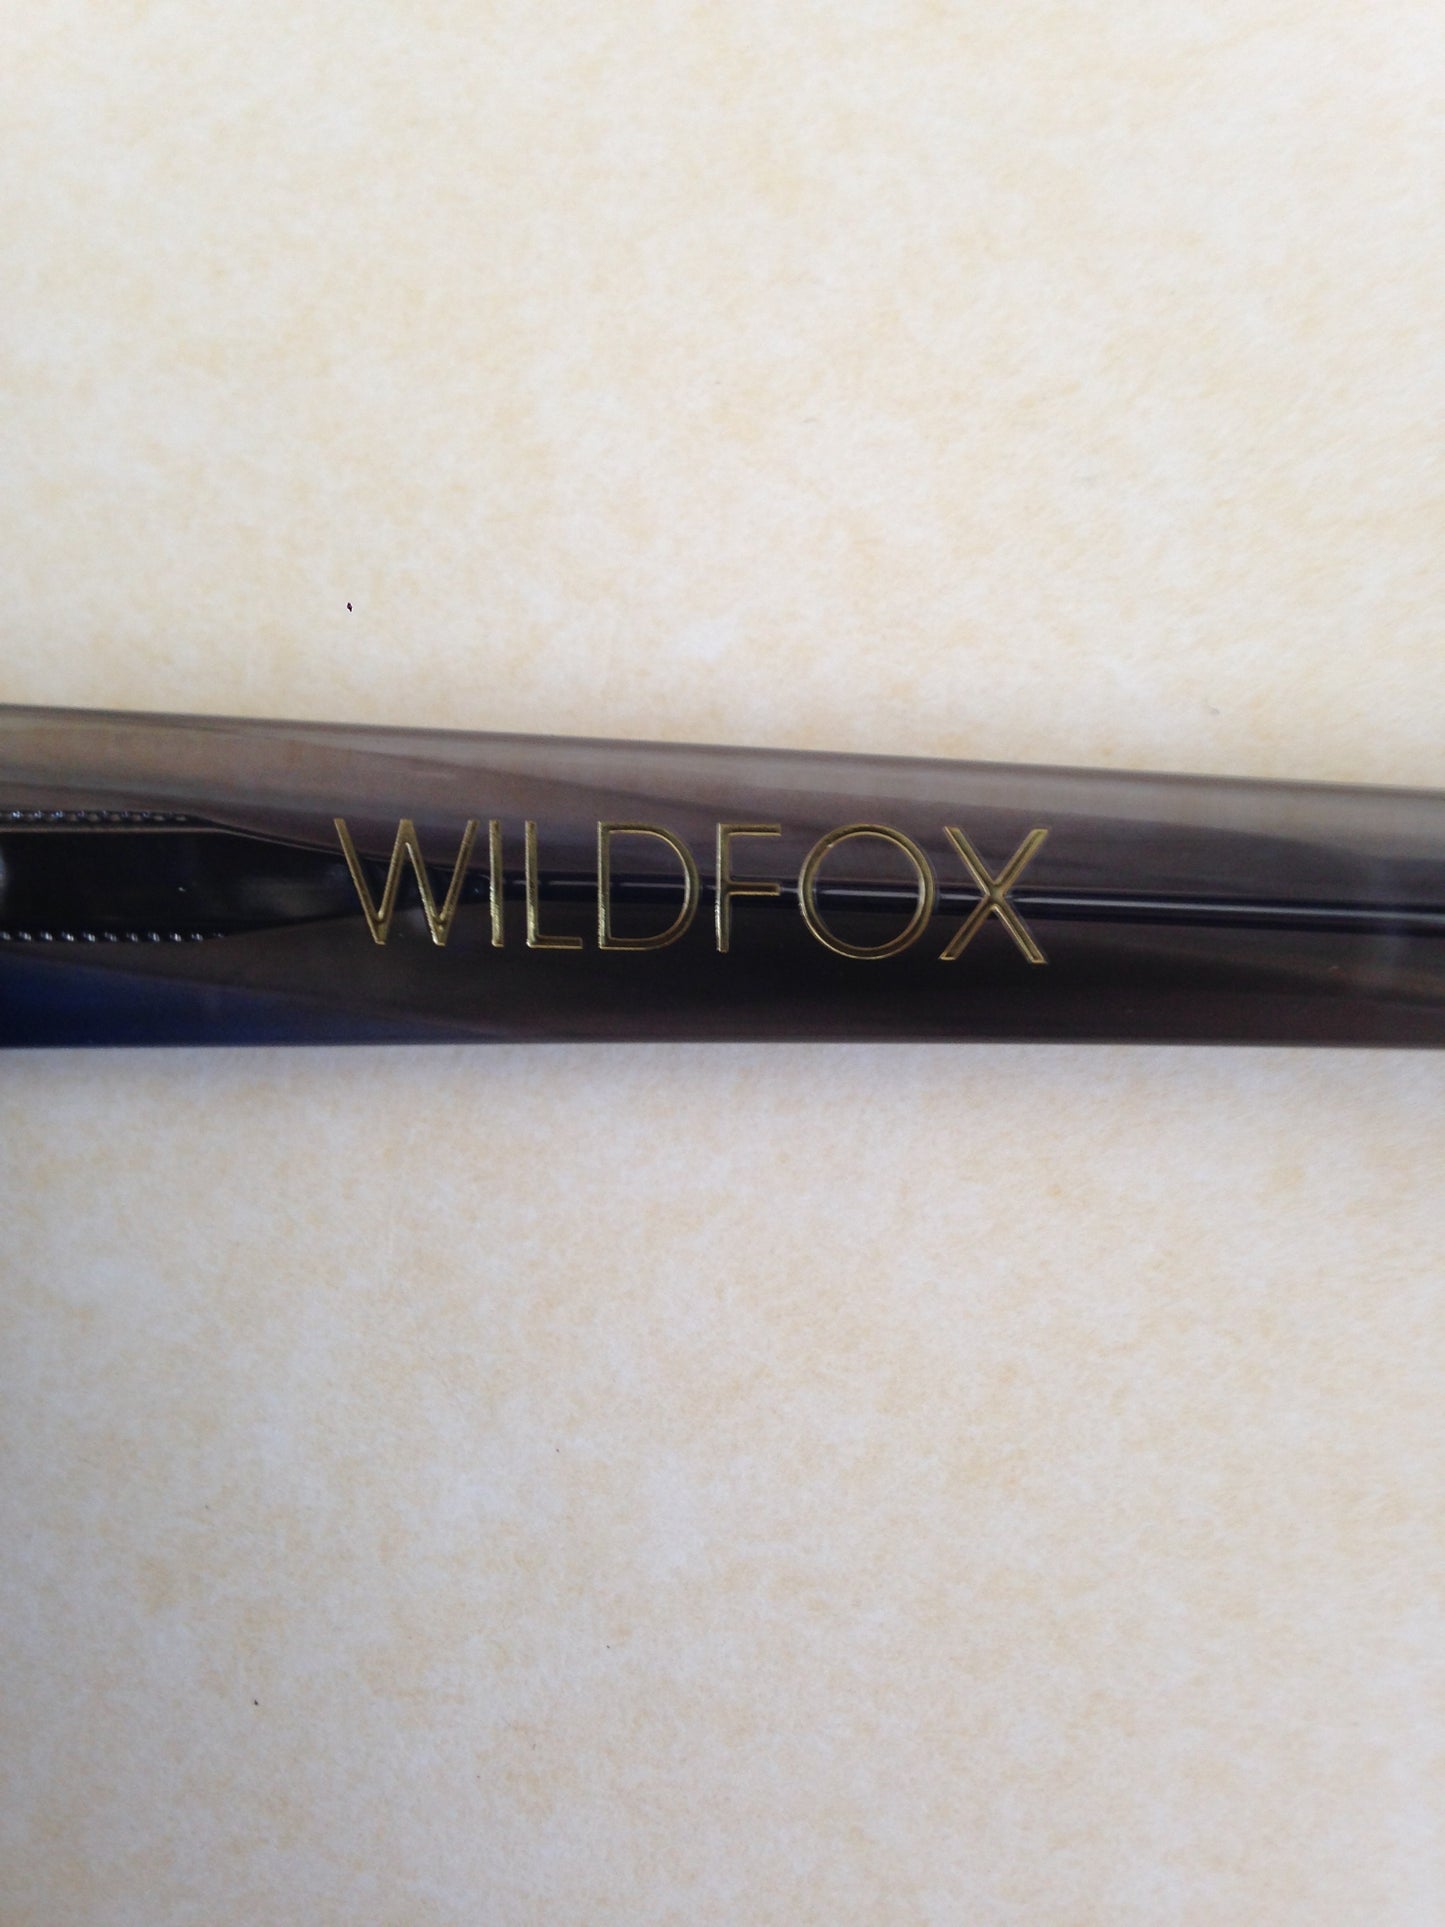 Wildfox Winston Sunglasses Square Molded Acetate Clear Blue Gray Frame Gray Lens - Sunglasses